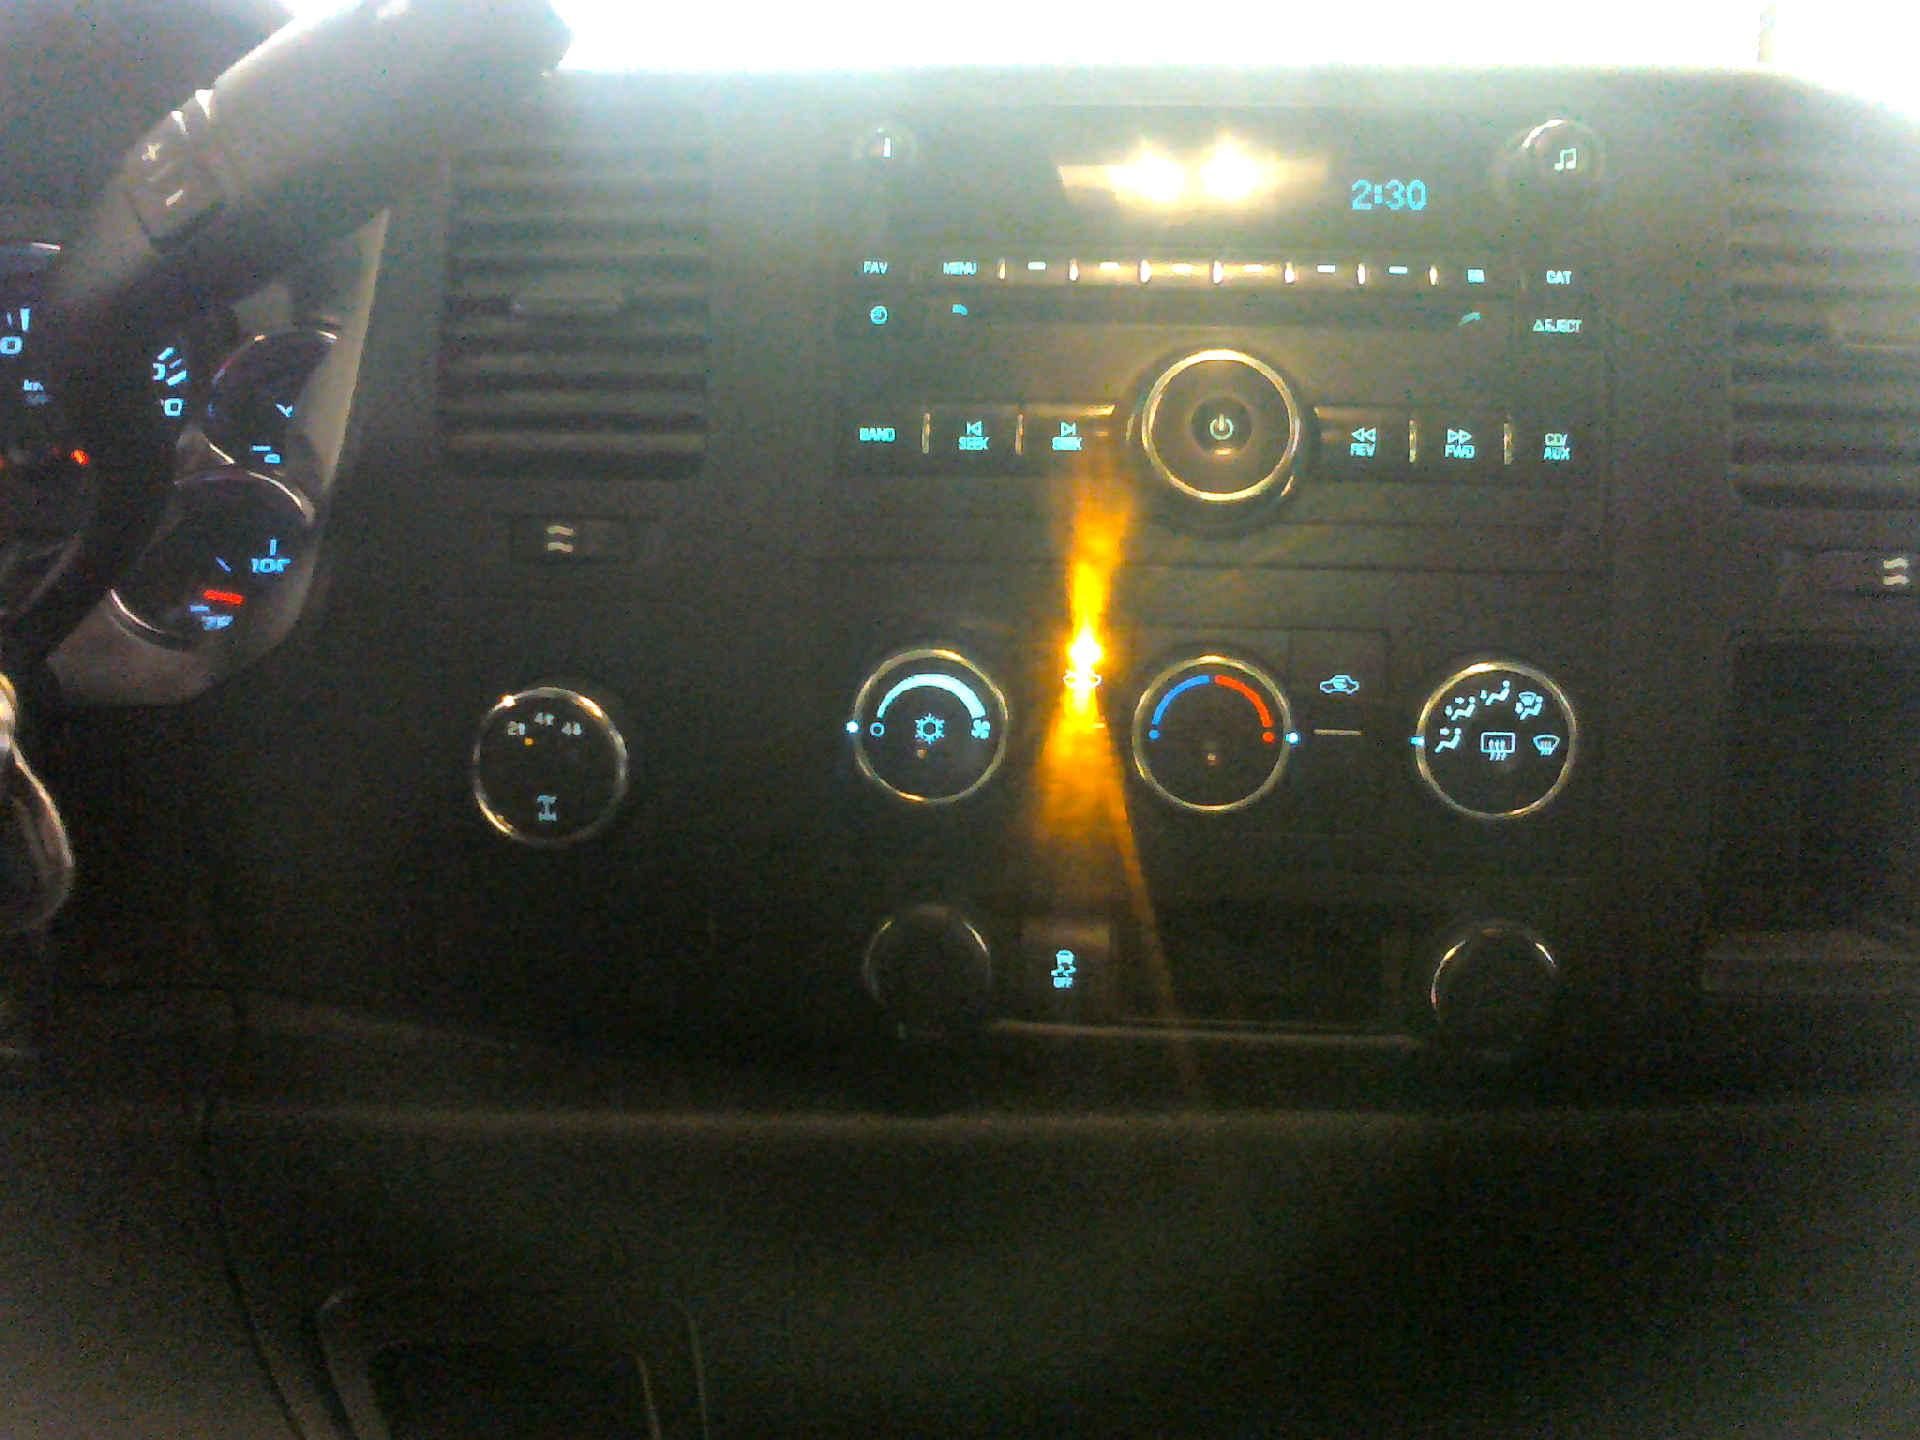 2012 GMC SIERRA 2500HD SLE EXT. CAB 4WD 6.0L V8 OHV 16V FFV AUTOMATIC SN:1GT220CG9CZ179215 OPTIONS: - Image 8 of 9